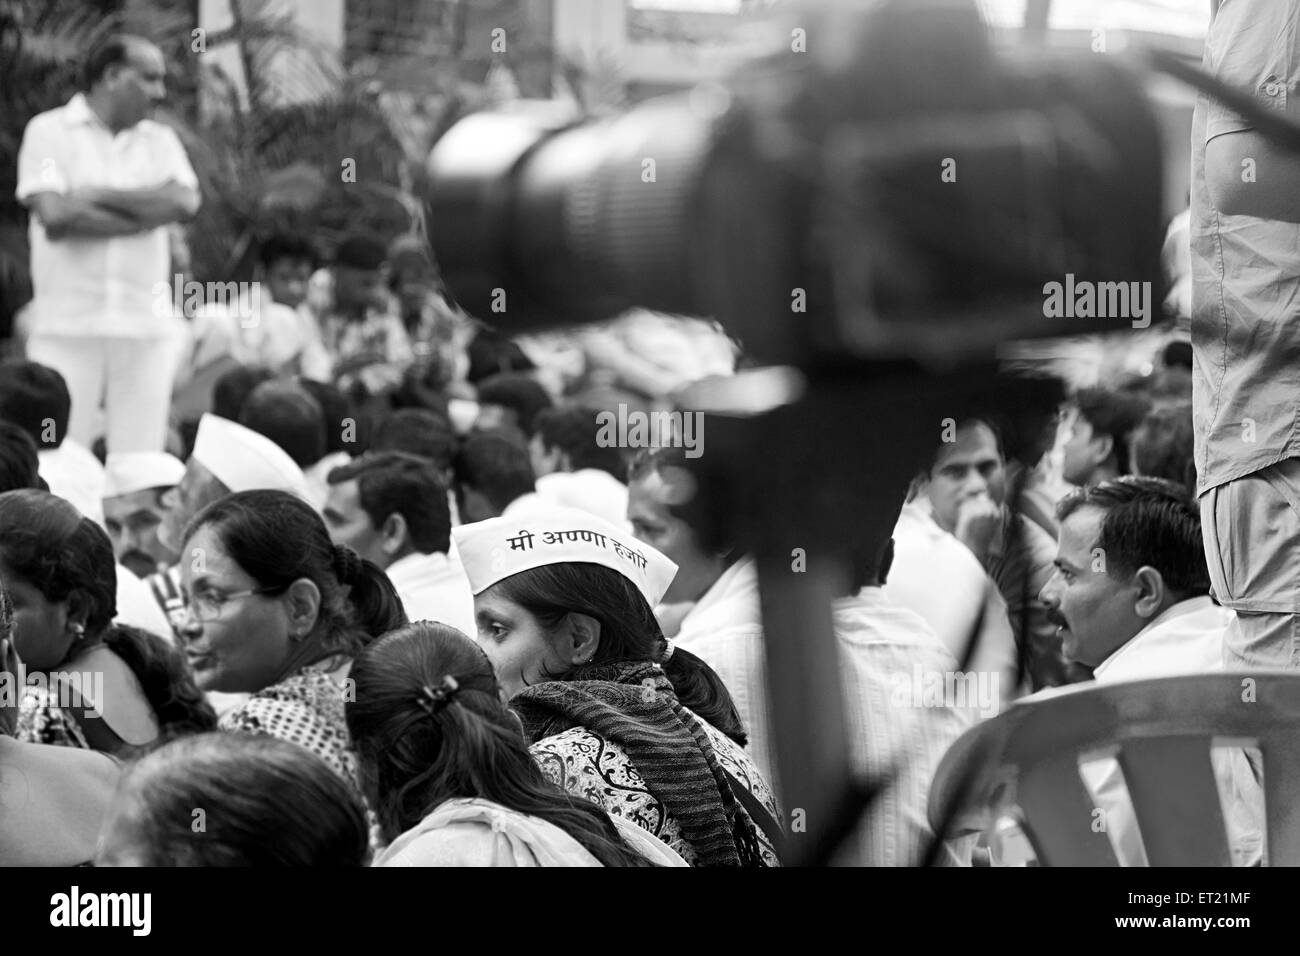 Corruption Against public Ralegaon Siddhi Maharashtra India Asia sept 2011 Stock Photo